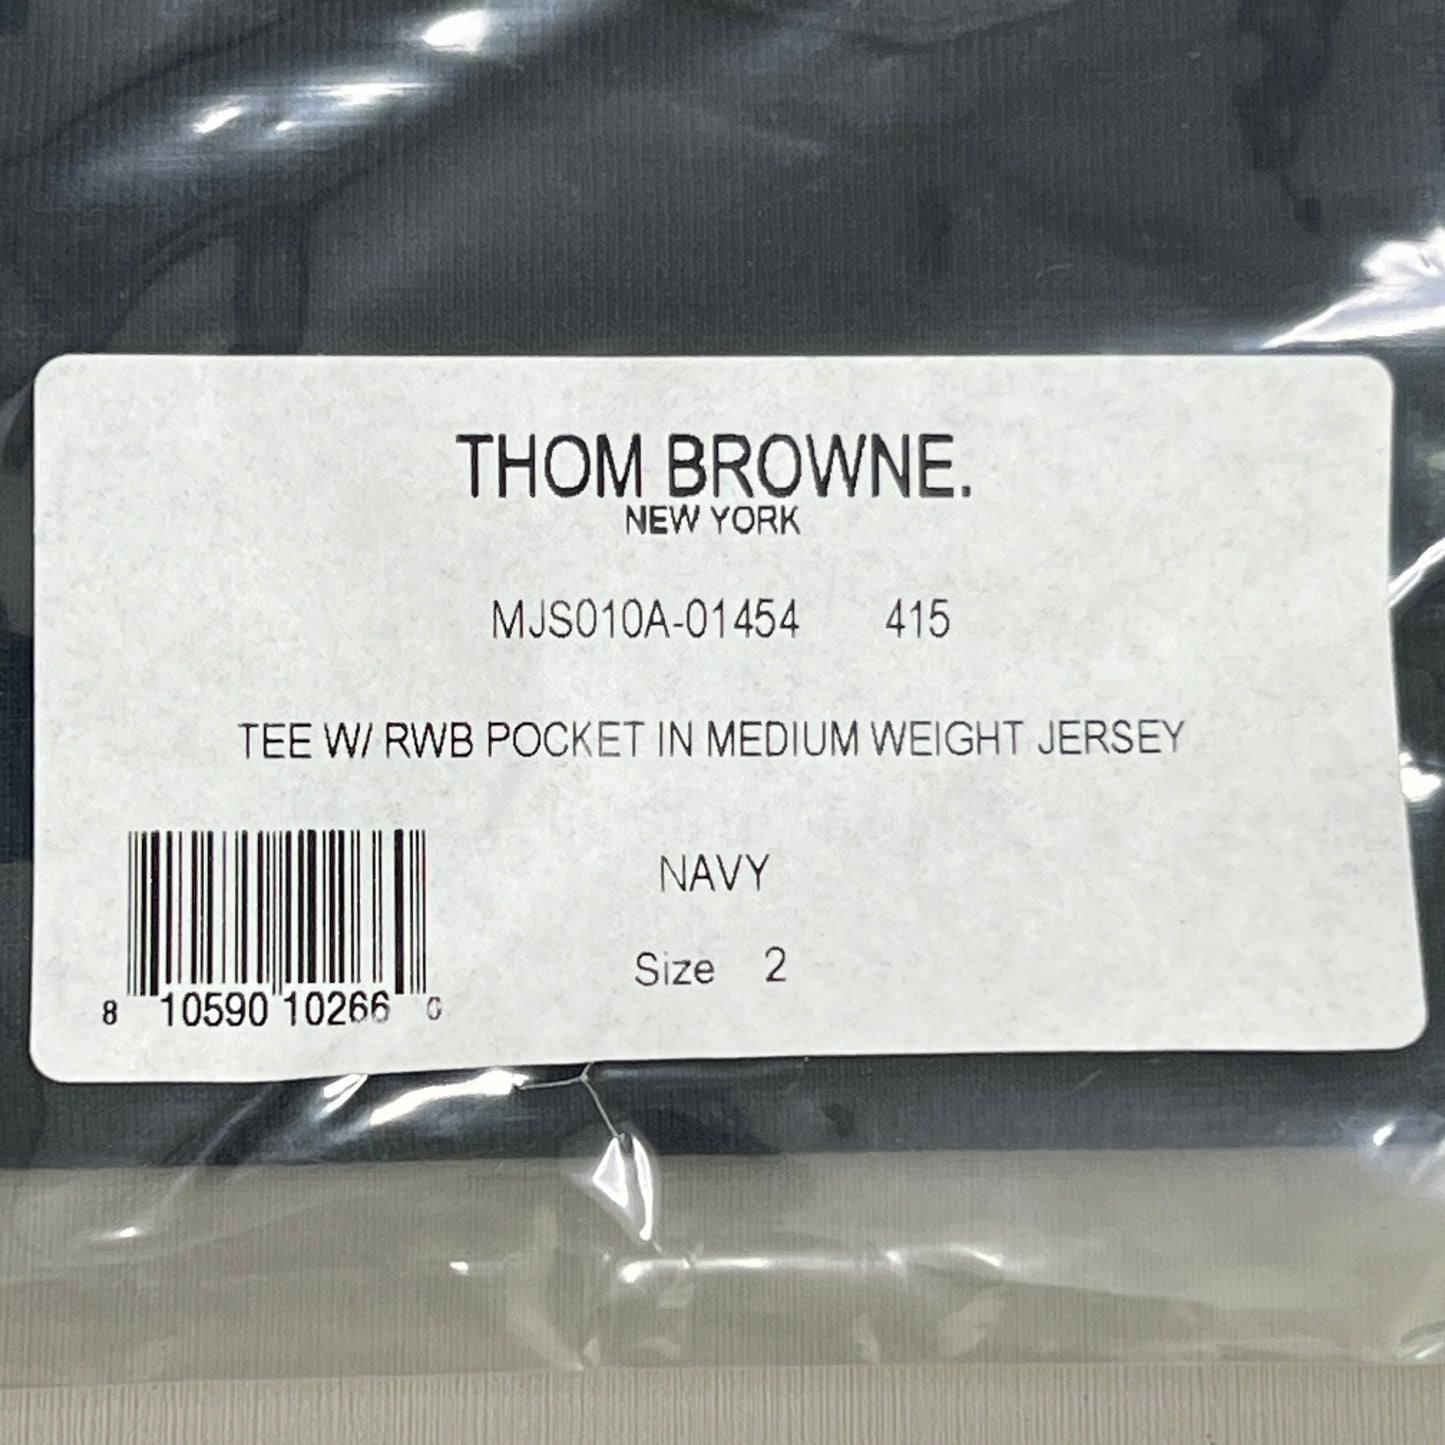 THOM BROWNE Short Sleeve RWB Pocket Tee in Medium Weight Jersey Cotton Navy Size 2(New)